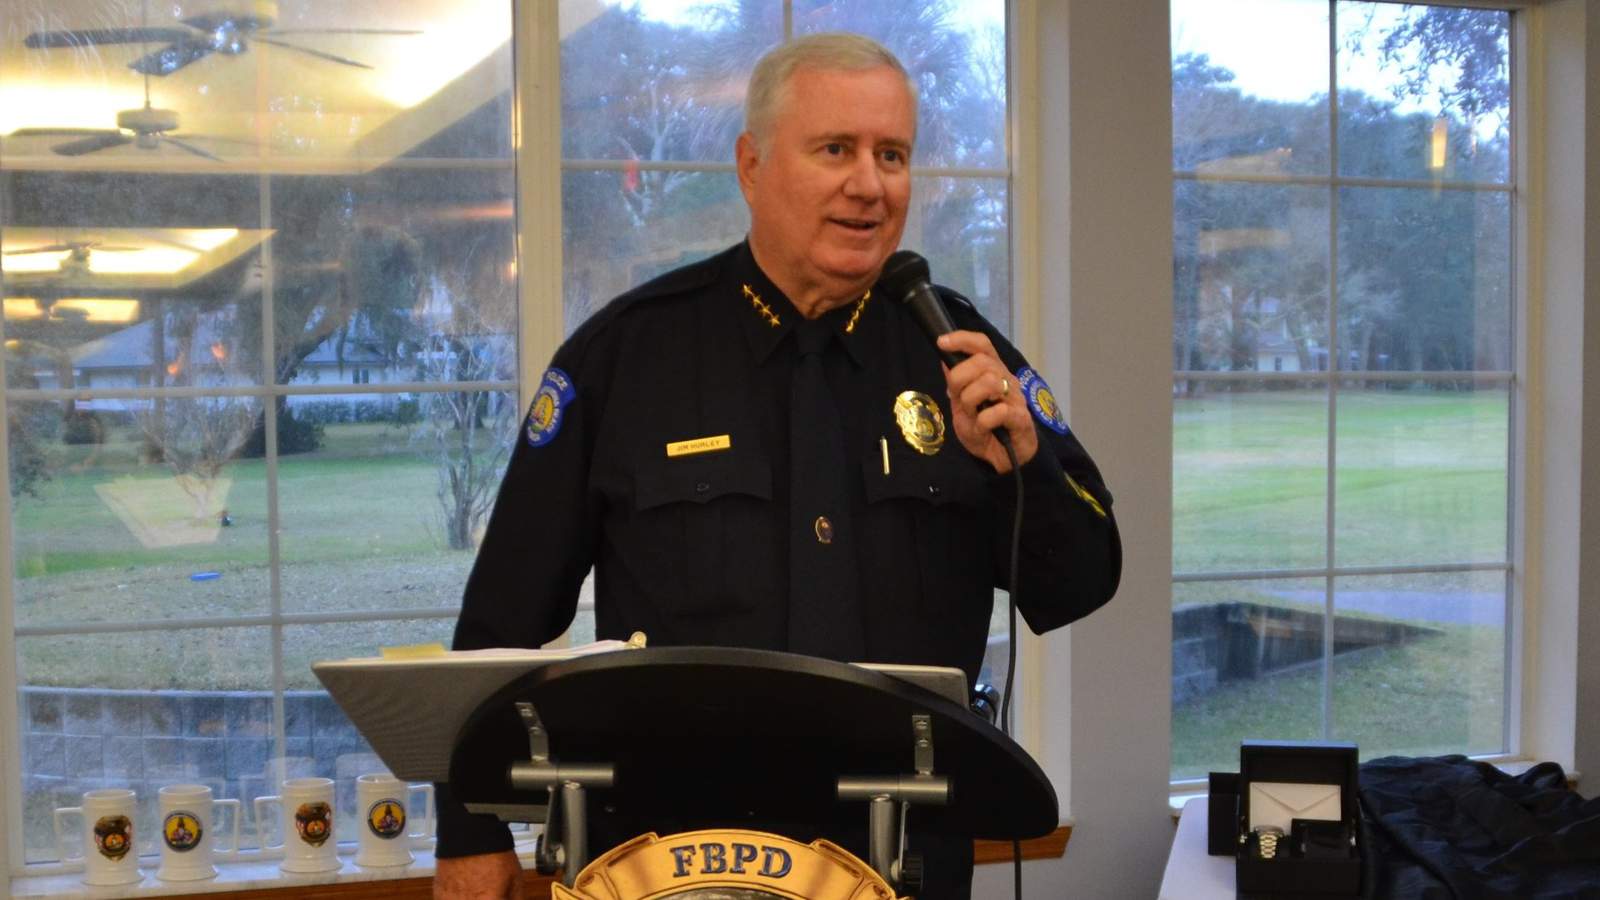 Fernandina Beach Police Chief James Hurley to retire in 2021